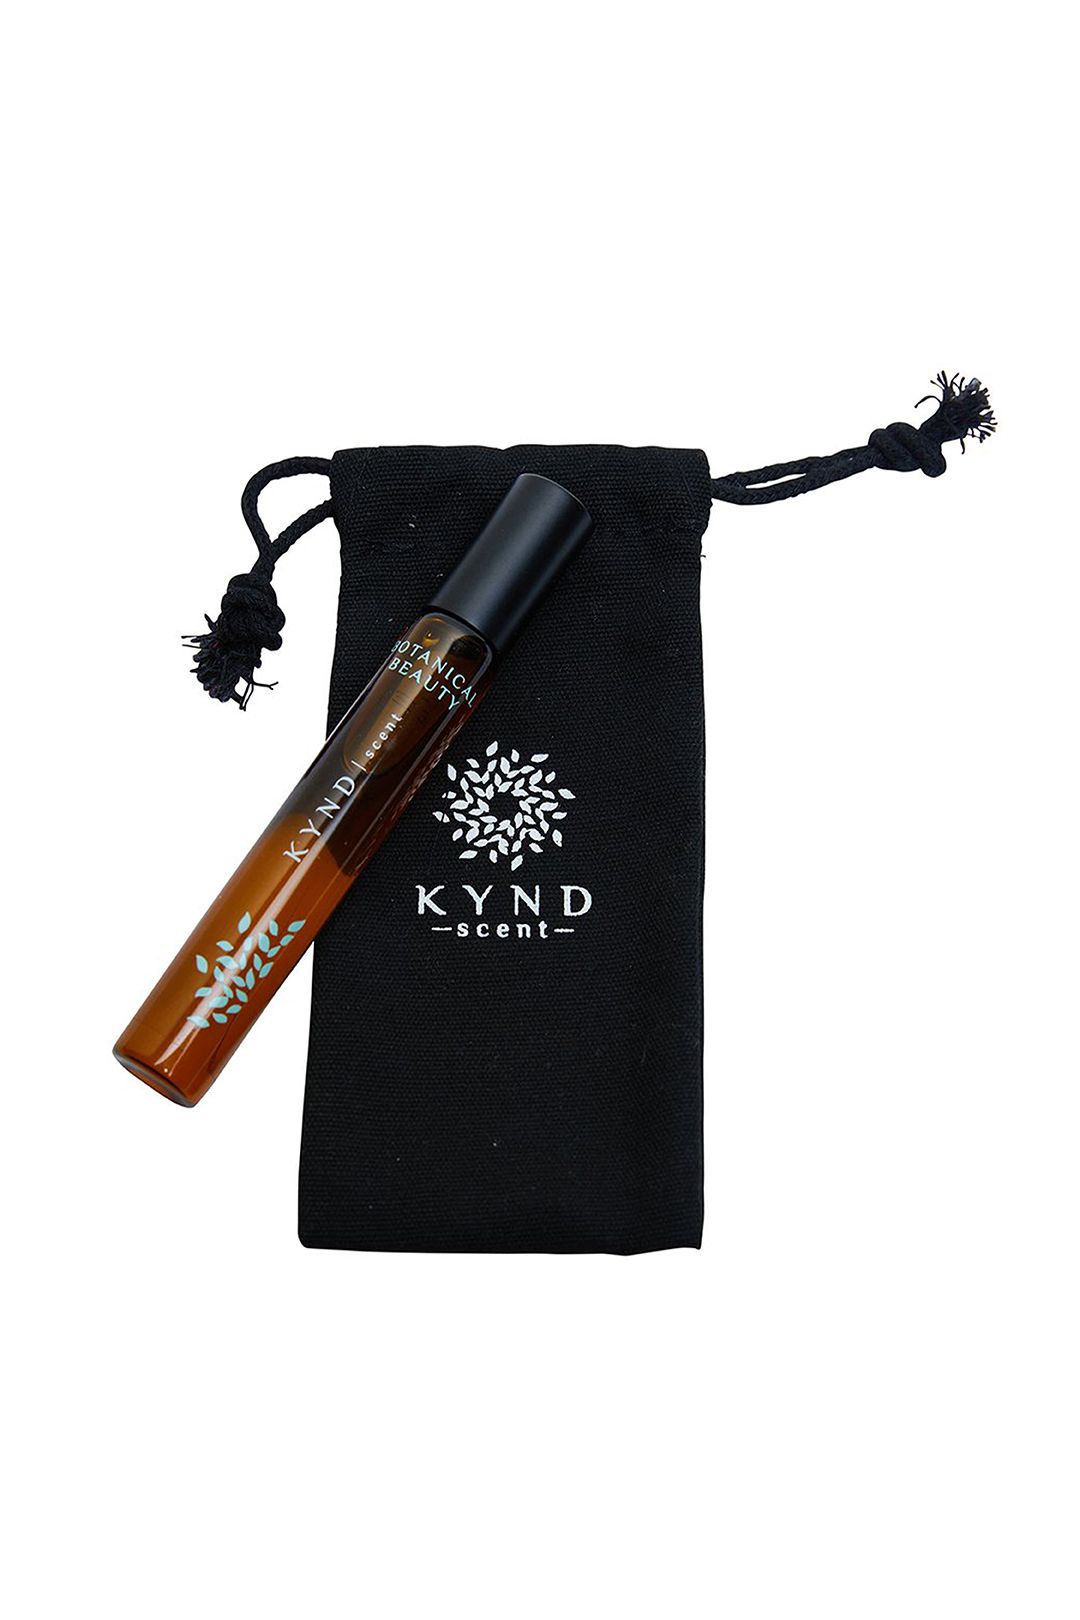 kynd-scent-botanical-beauty-product-3